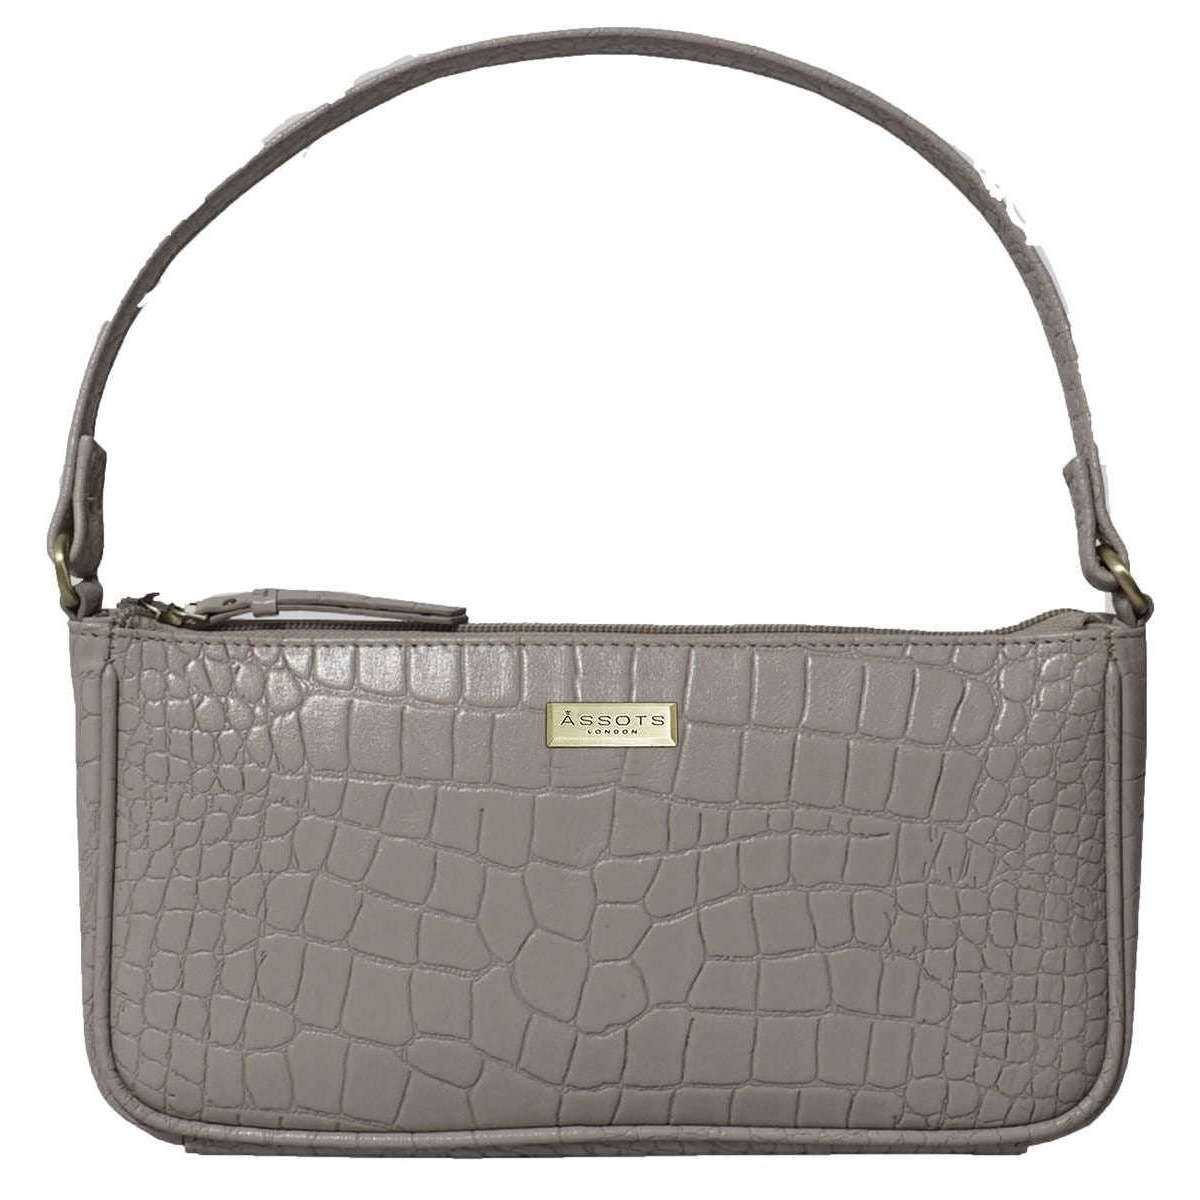 Zara Shoulder Bags for Women for sale | eBay